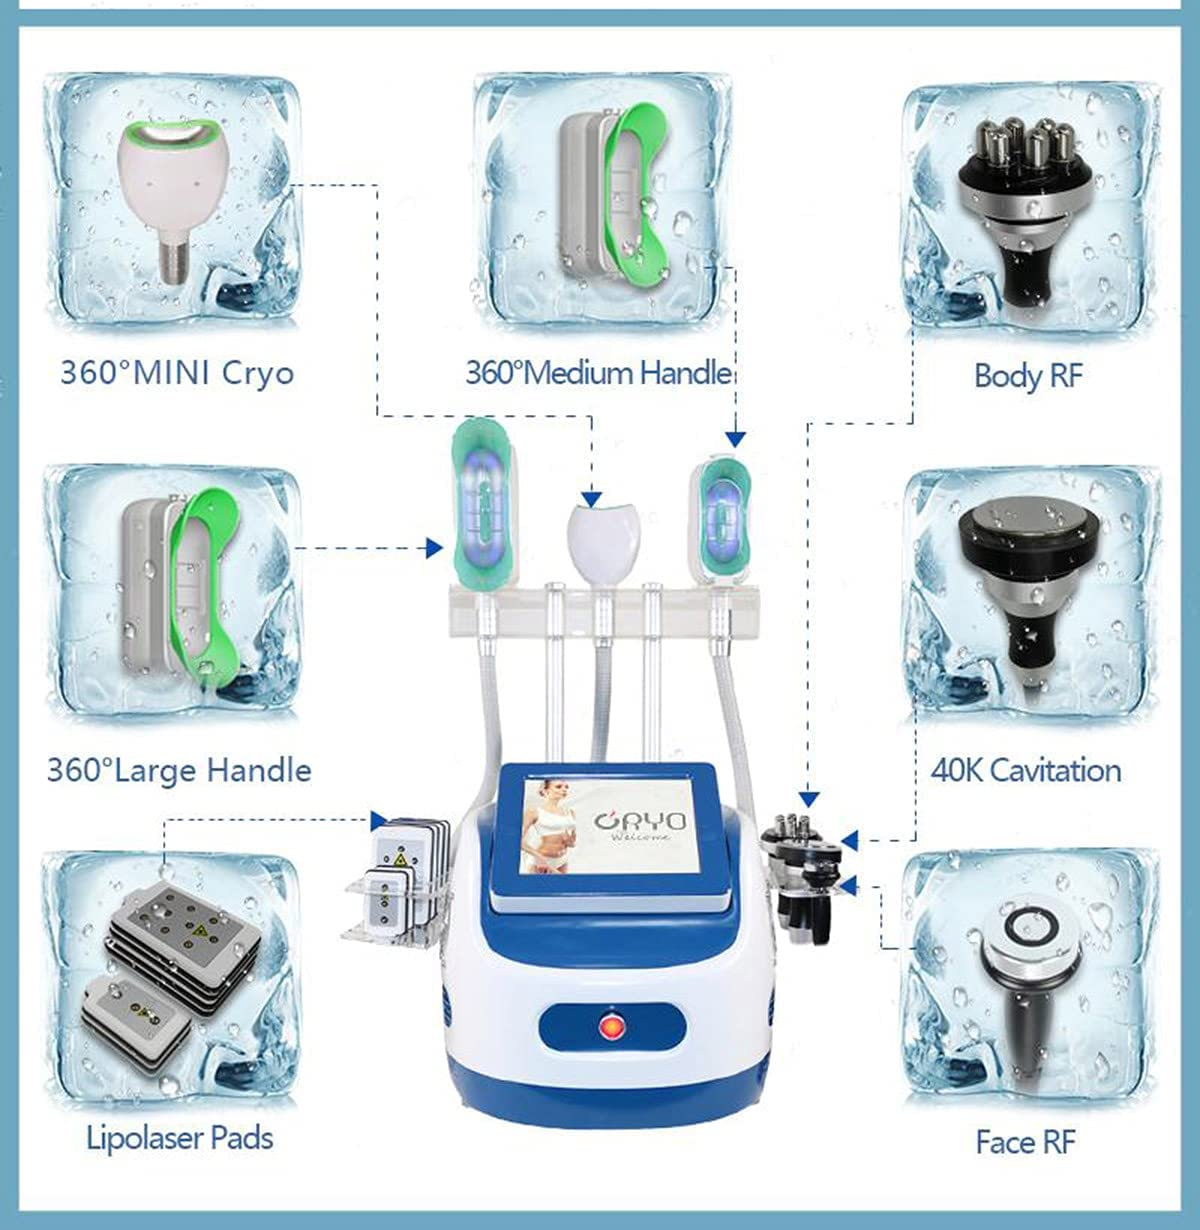 360° Cryo Cryolipolysis 40K Cavitation Fat Freezing RF Body Slimming Machine